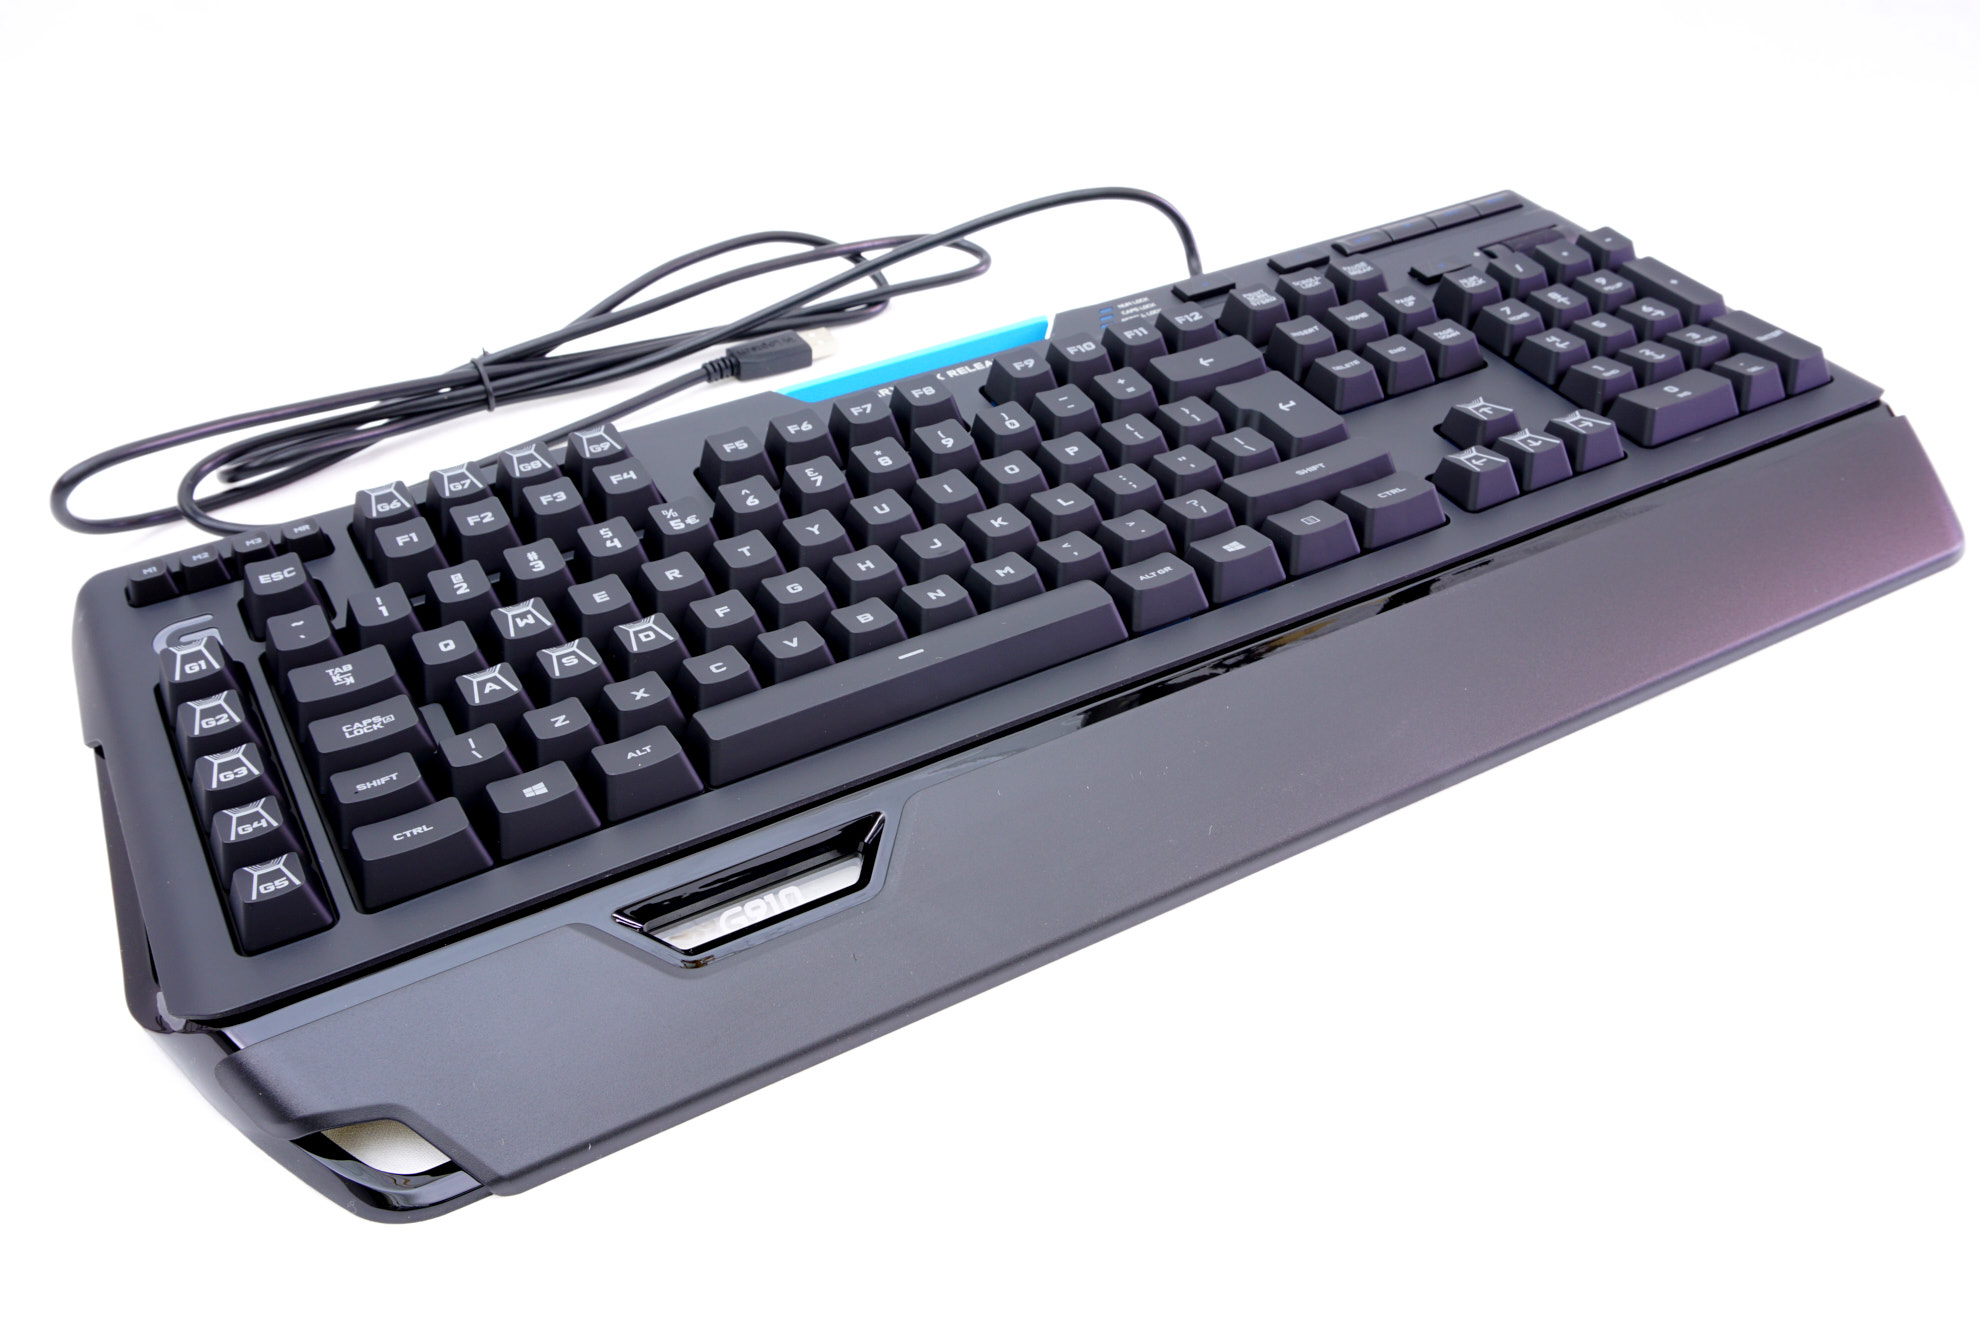 overtro Revision tilstrækkelig The Logitech G910 Orion Spectrum Mechanical Gaming Keyboard - The Logitech  G910 Orion Spectrum Mechanical Keyboard Review